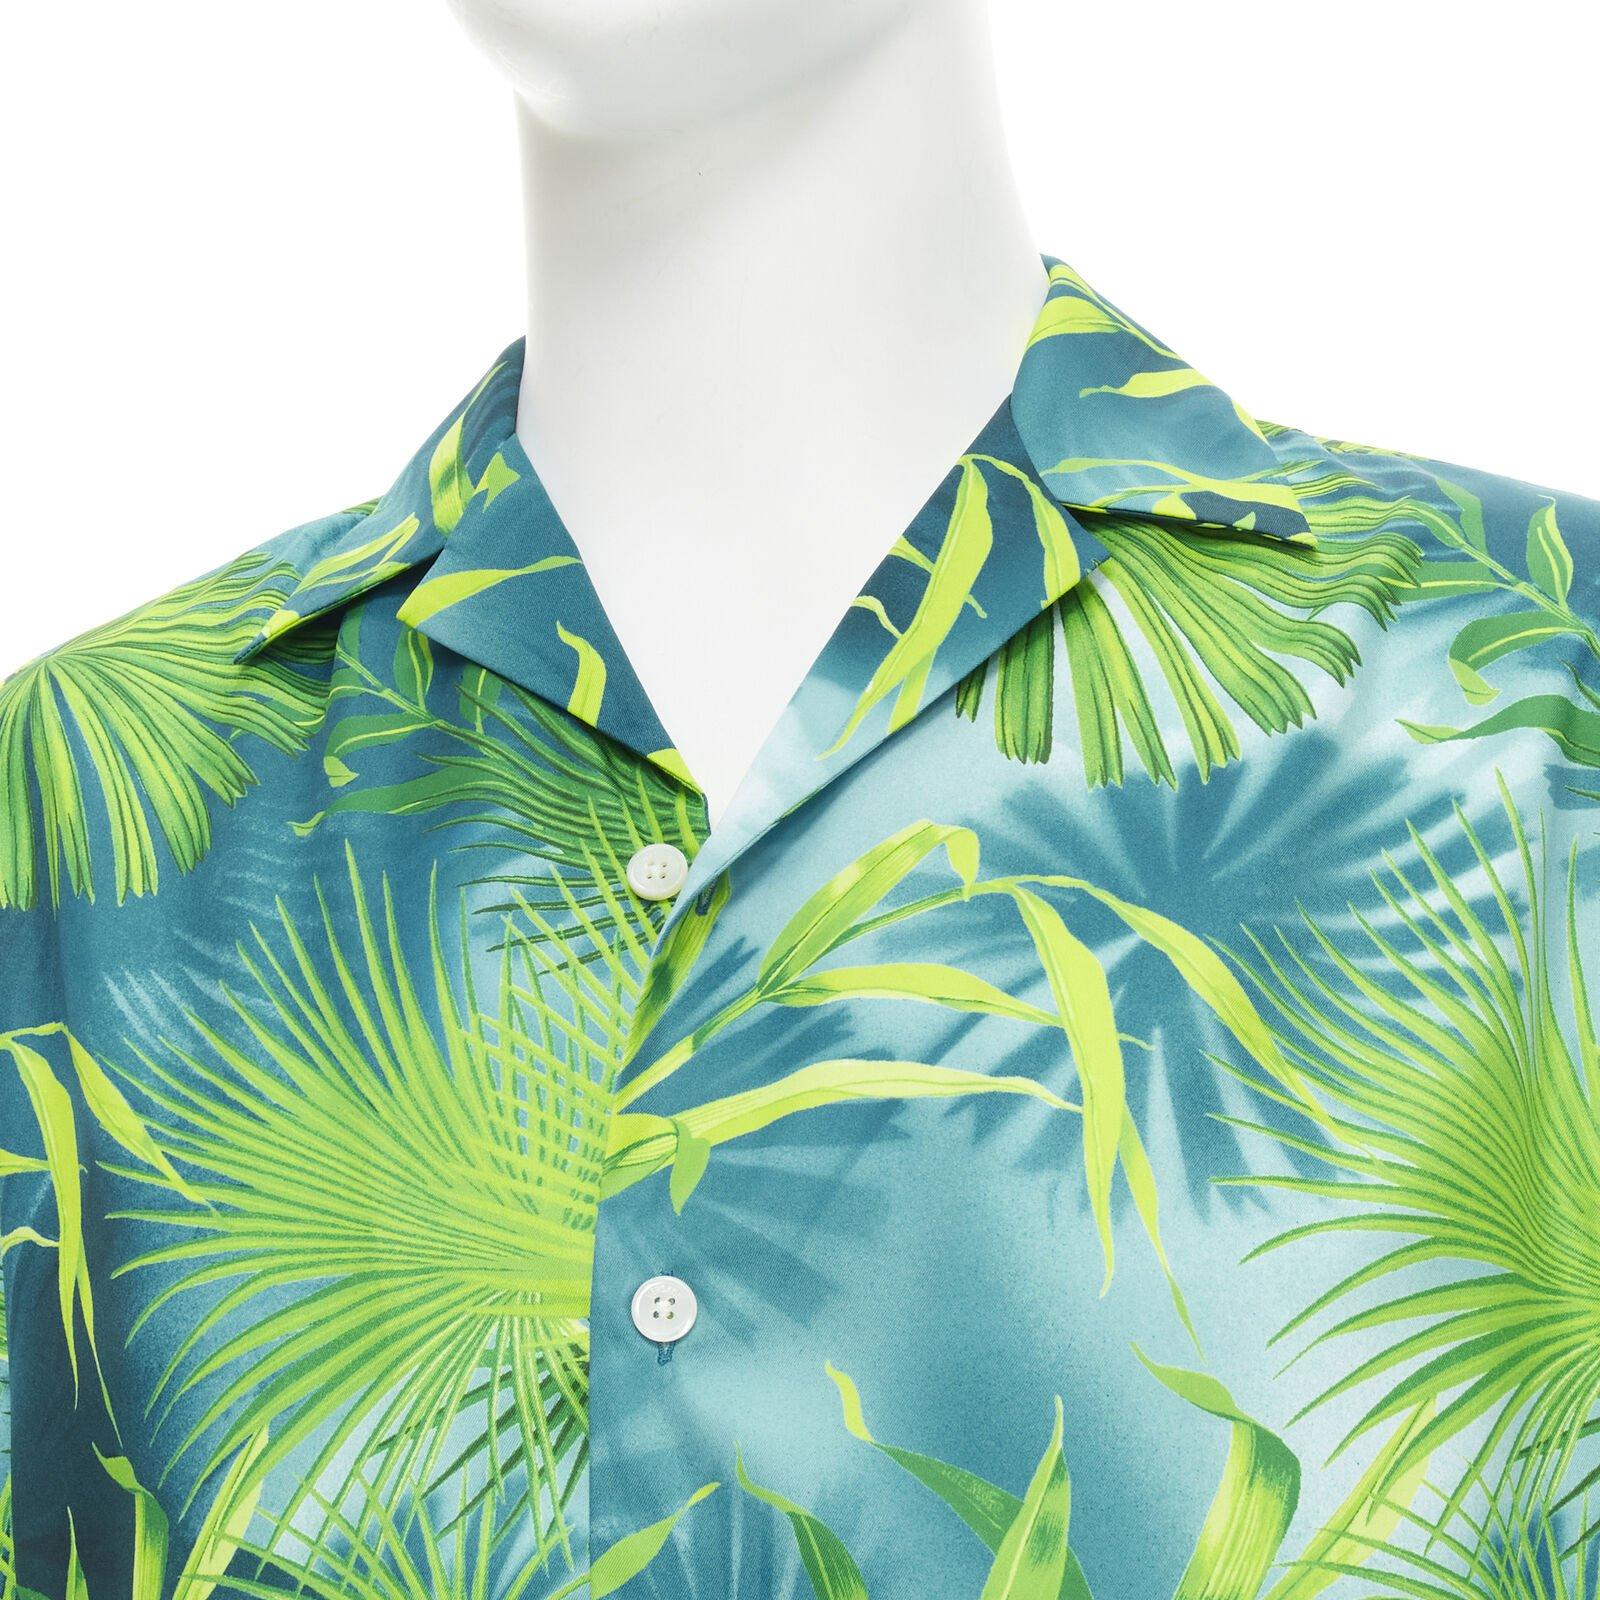 VERSACE 2020 Iconic JLo Jungle print green tropical print shirt EU38 S For Sale 3